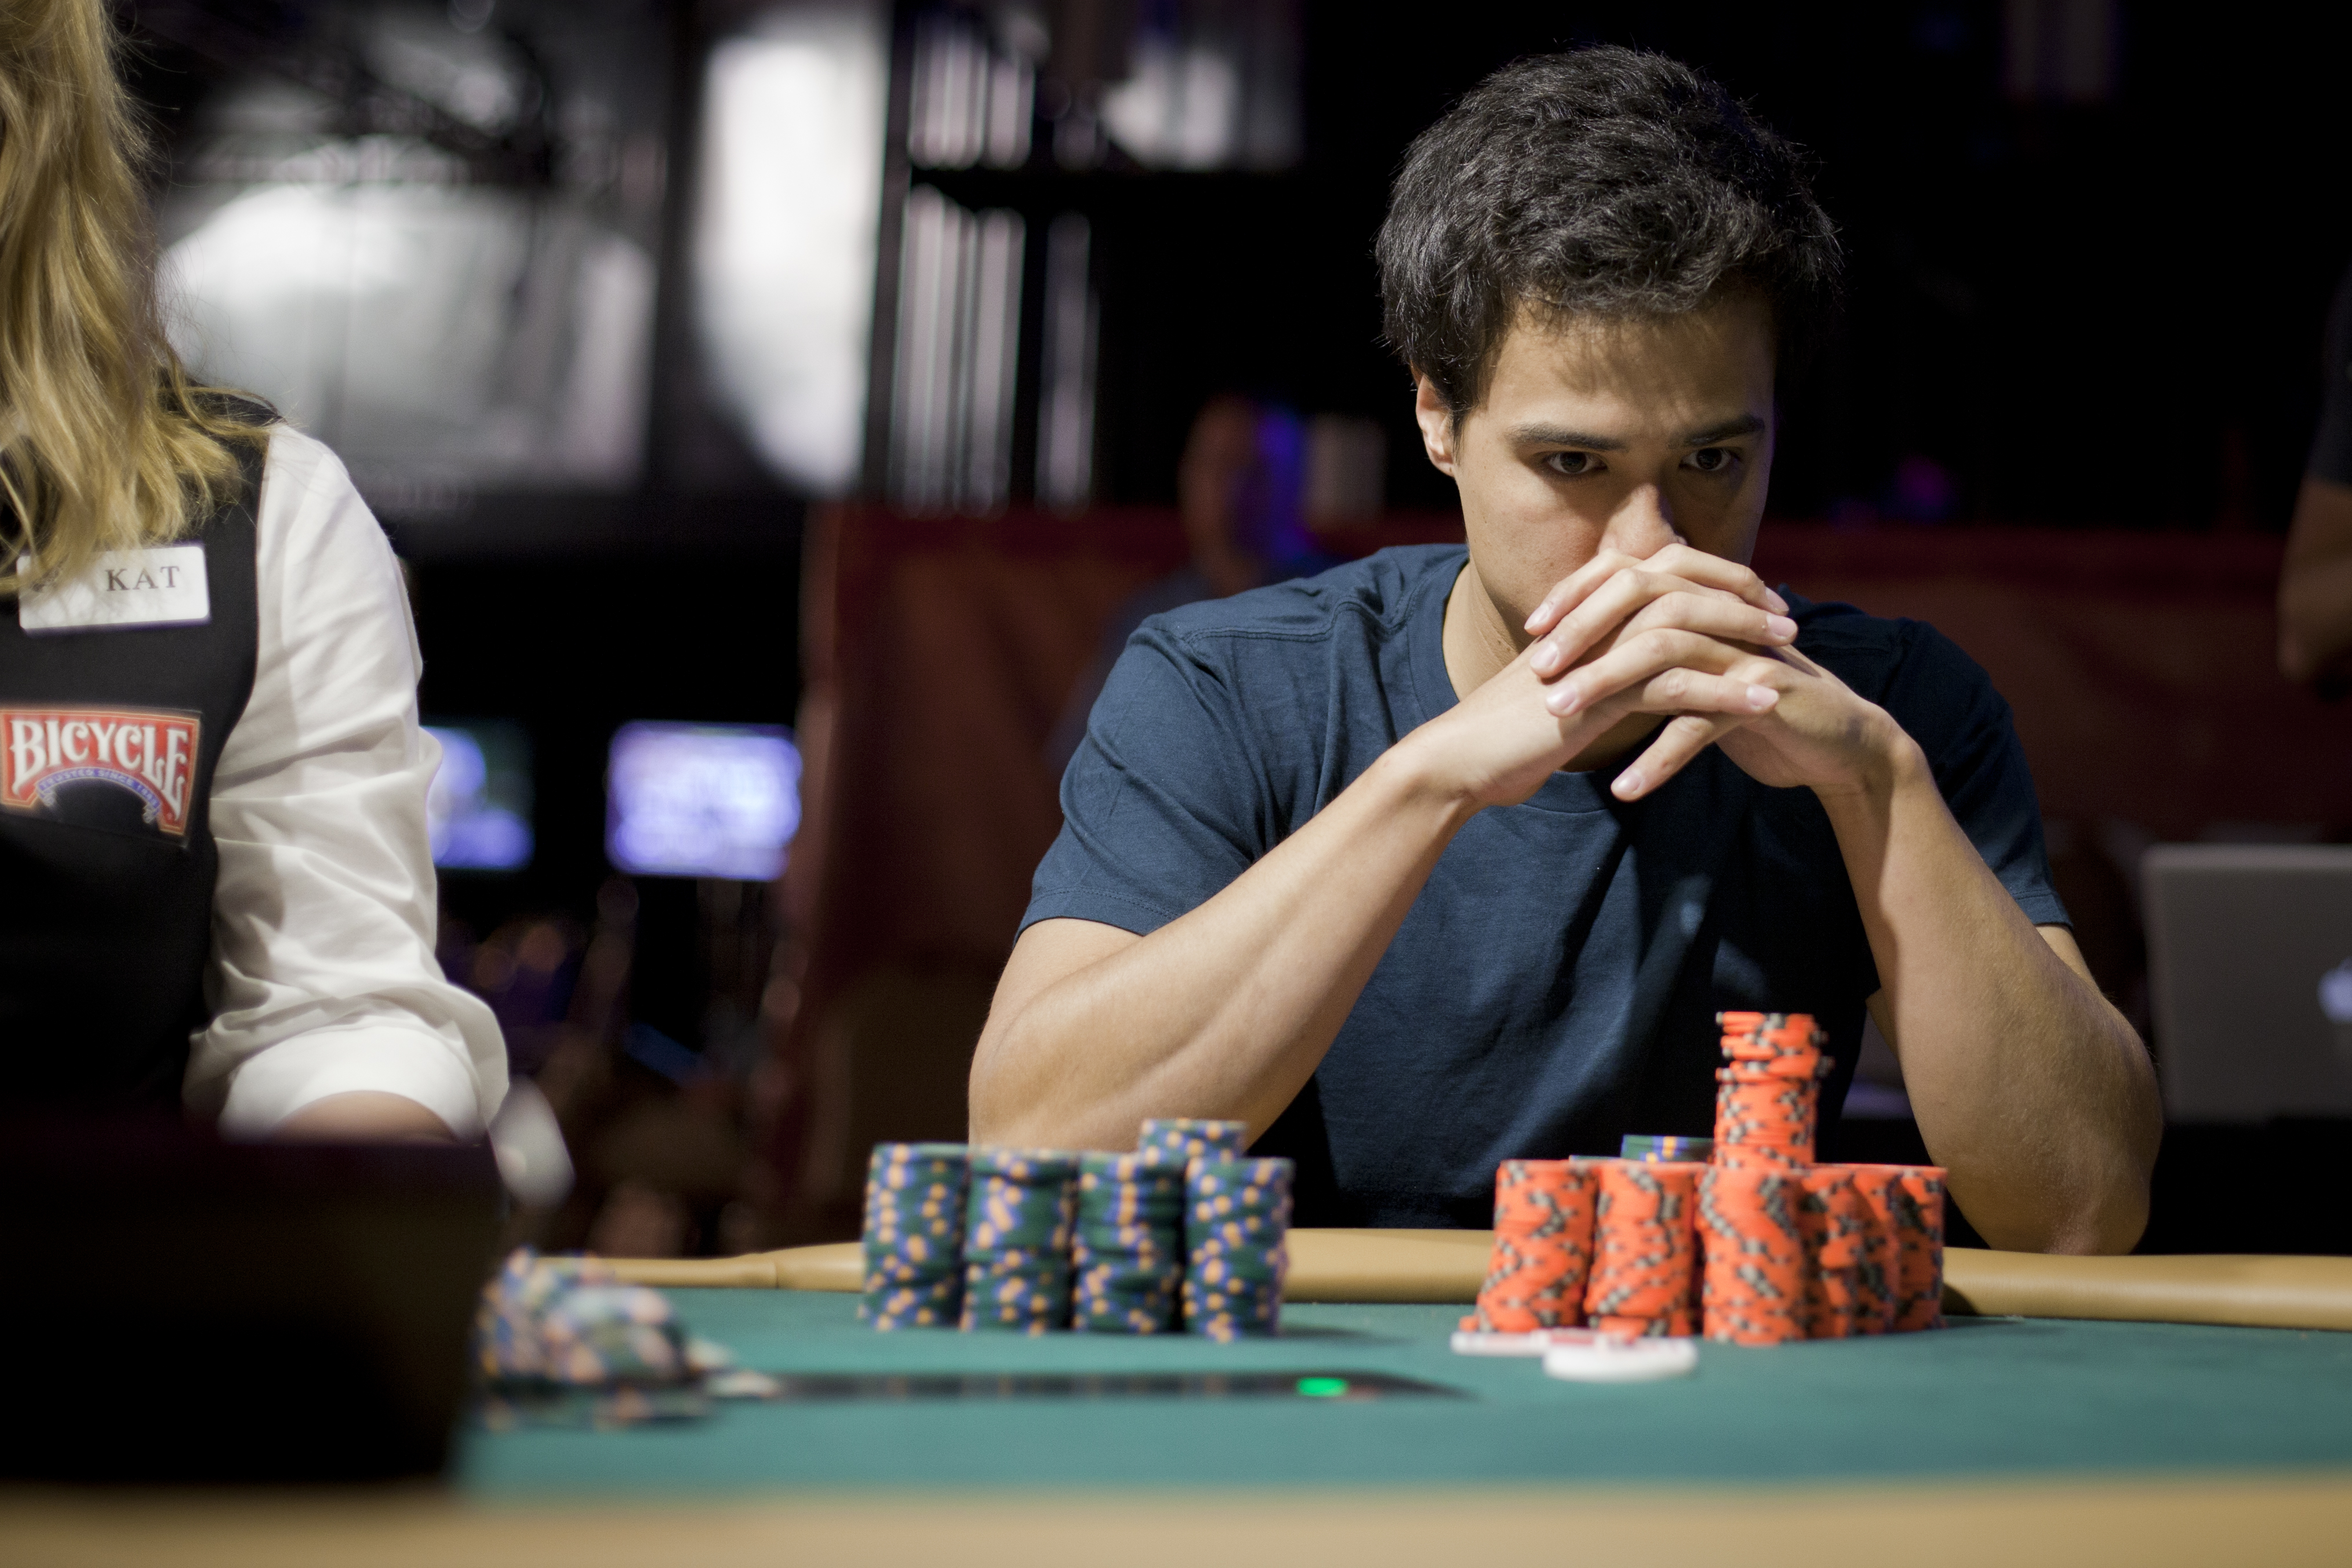 Cara Bertaruh di Turnamen Poker: Panduan untuk Mengukur Taruhan Anda Seperti Seorang Pro | PokerNews